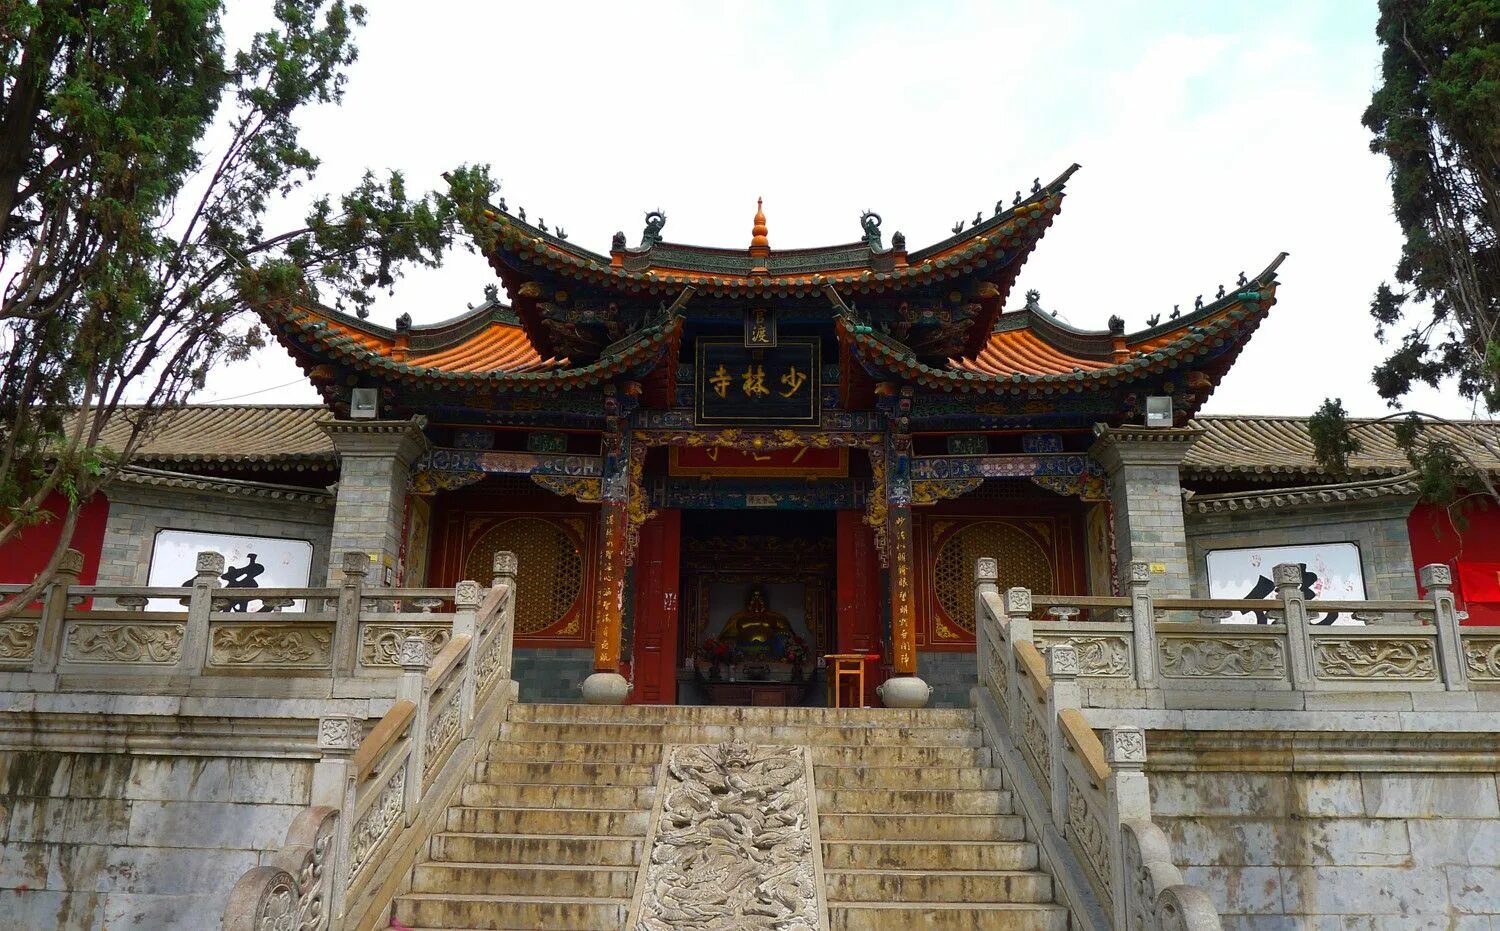 Shaolin temple. Храм Шаолинь Лоян. Монастырь Шаолинь Китай. Буддийский монастырь Шаолинь. Храм Шаолинь Хэнань.